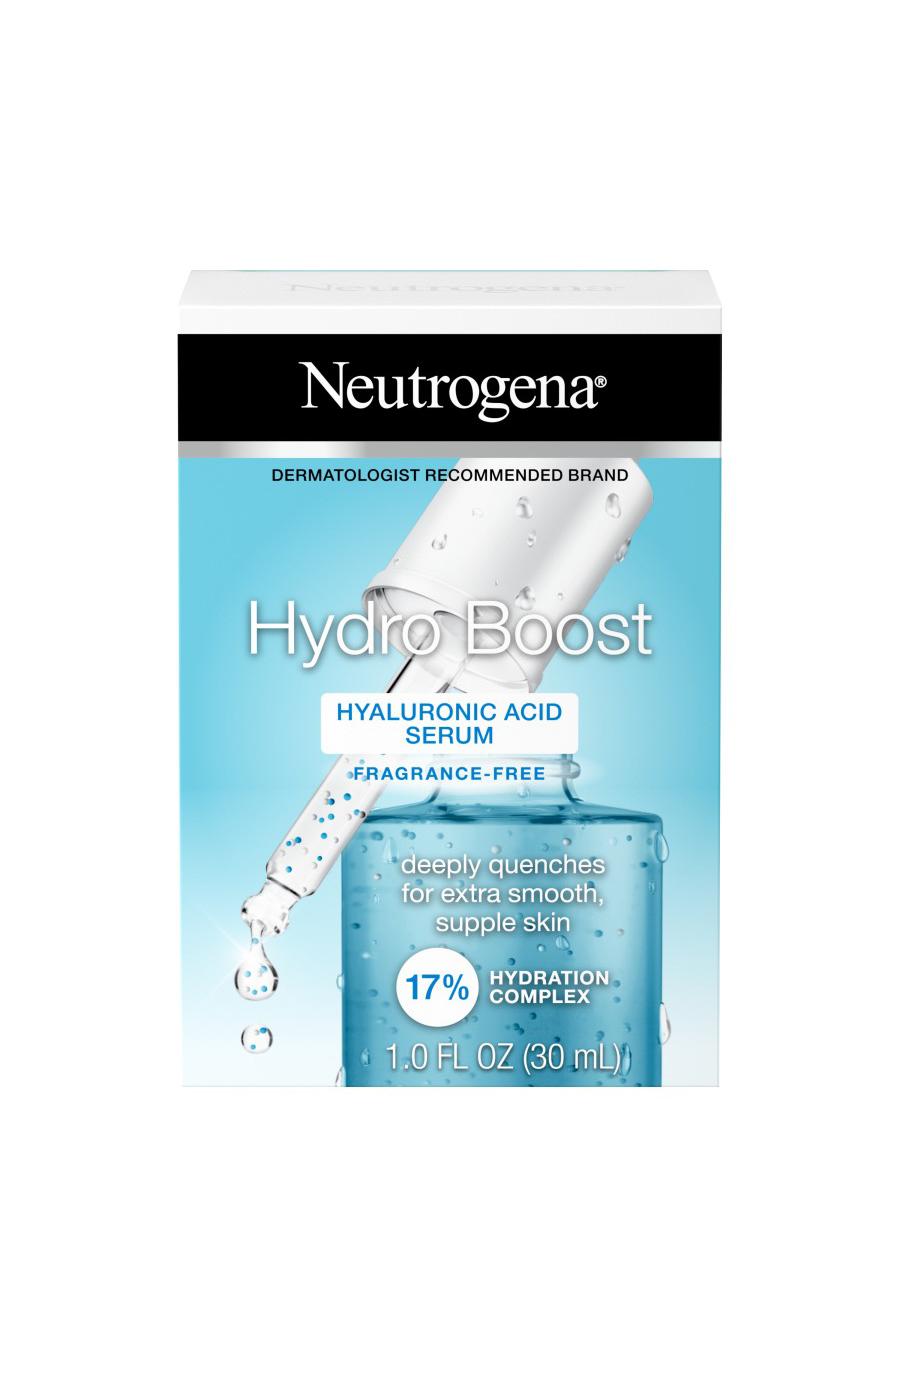 Neutrogena Hydro Boost Hyaluronic Acid Serum; image 1 of 6